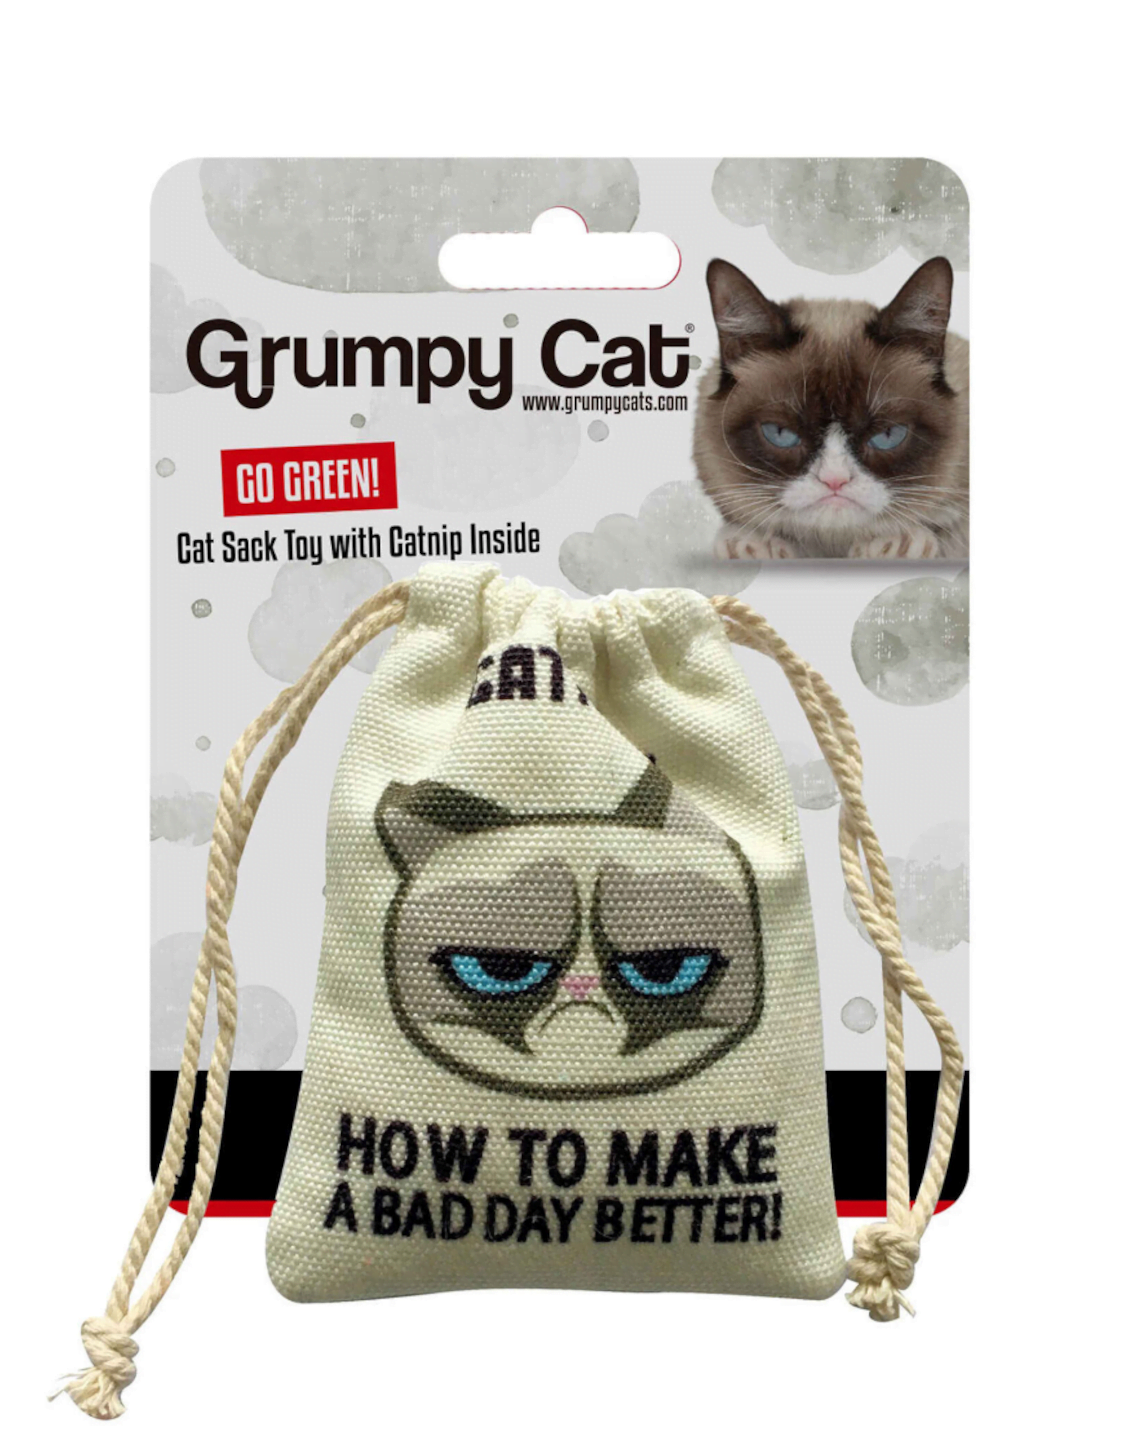 Grumpy Catnip Cat Sack